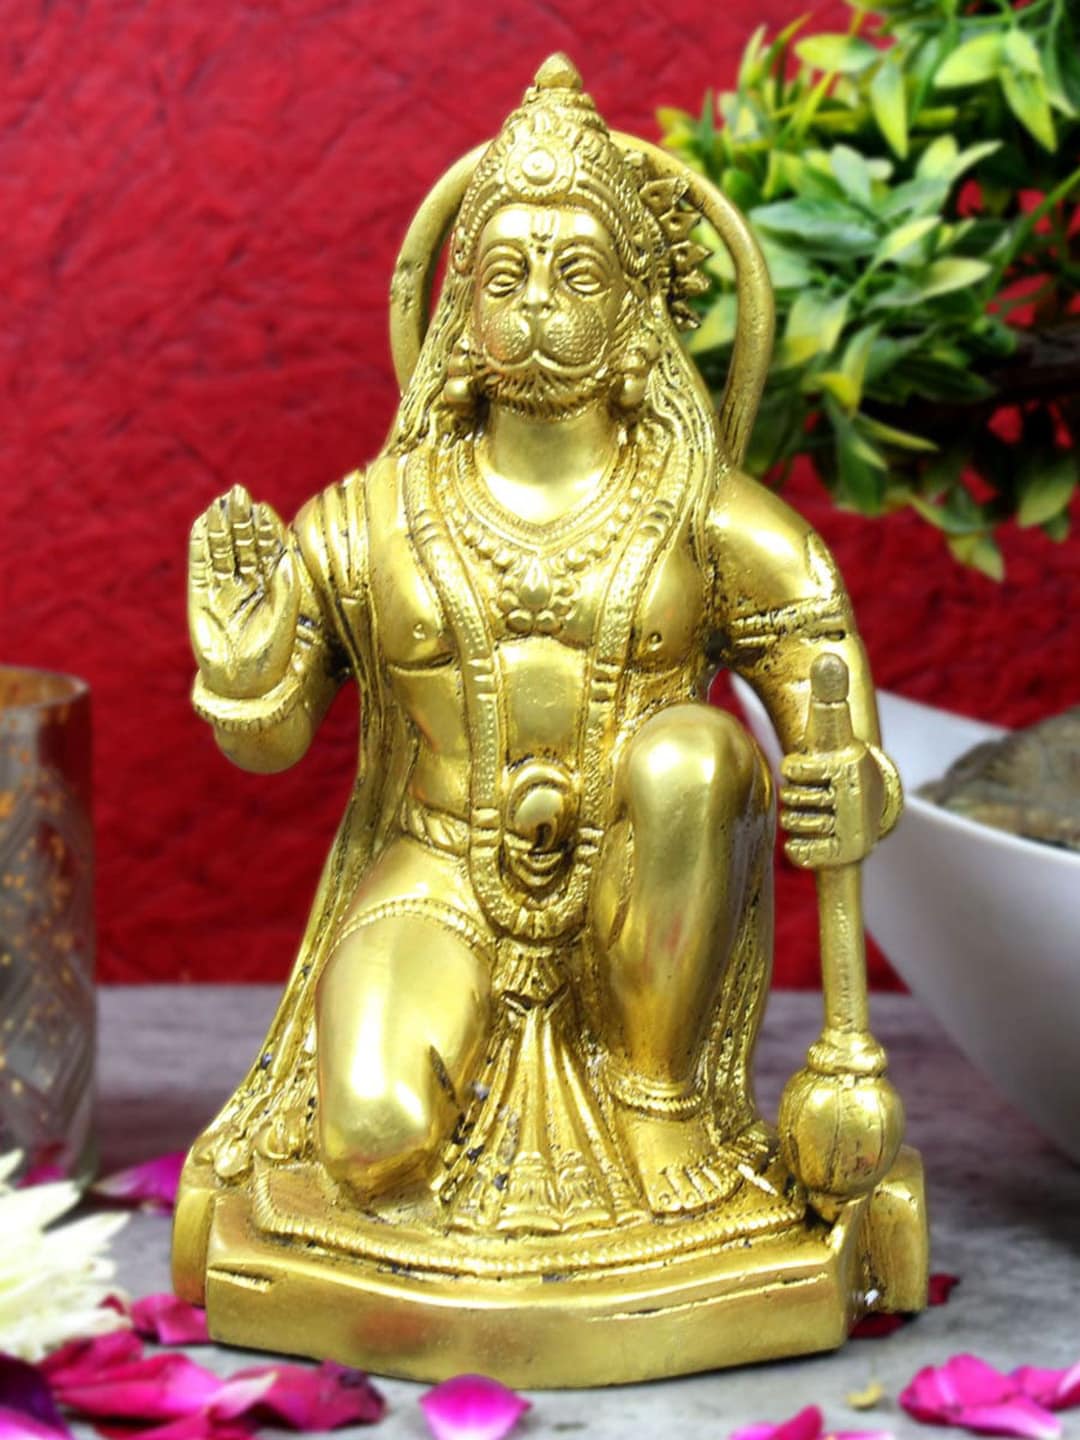 StatueStudio Gold-Toned Lord Hanuman Showpiece Price in India